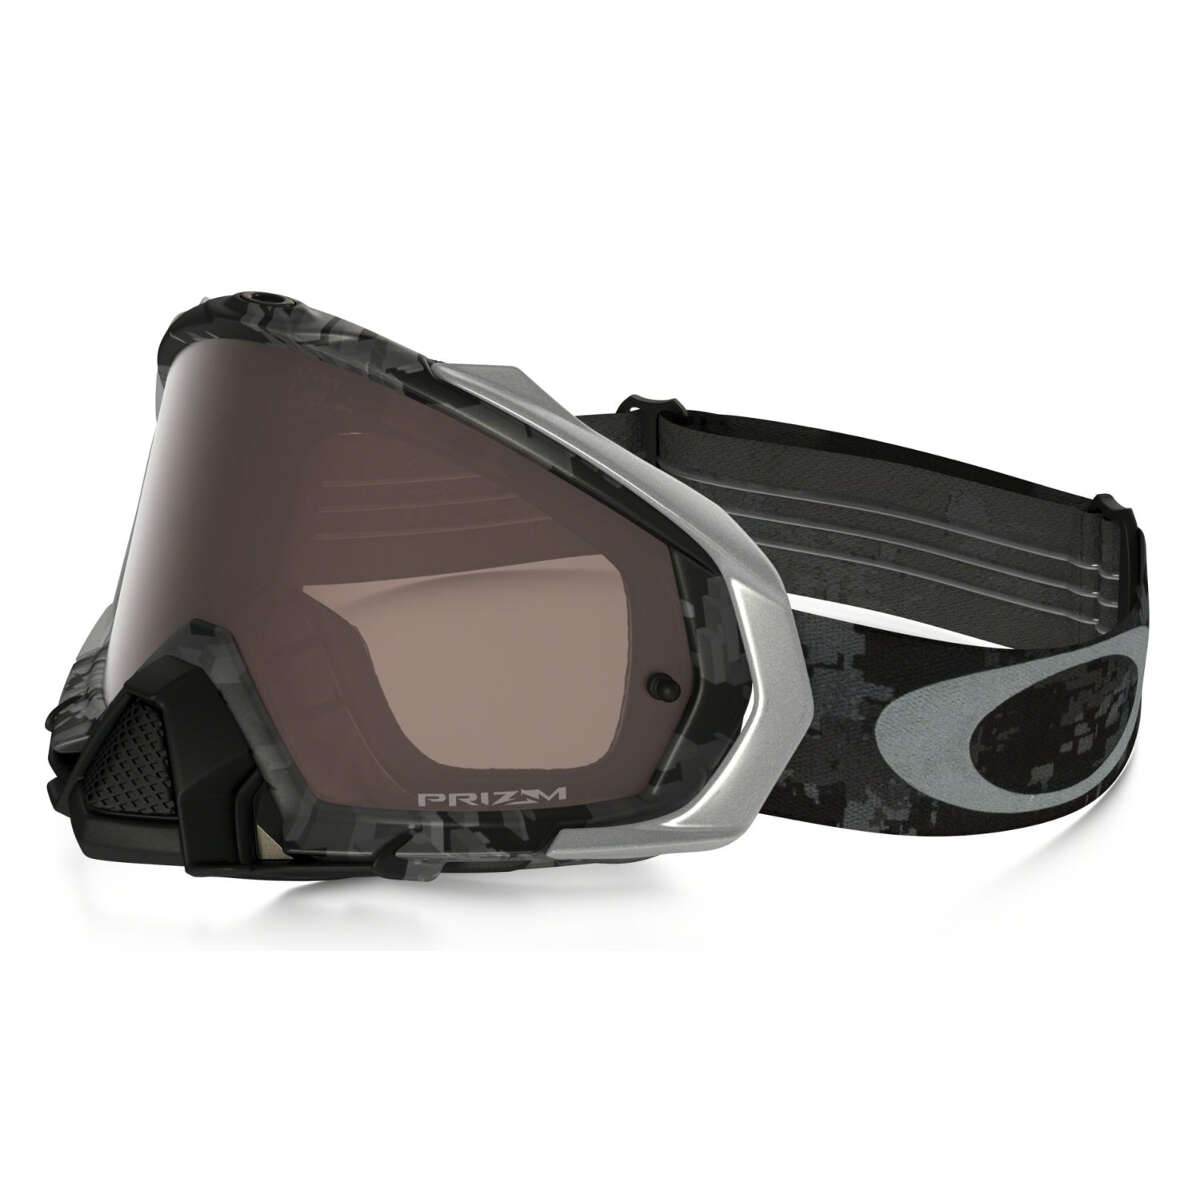 Oakley Goggle Mayhem Pro MX James Stewart Signature: Stealth Camo - Dark Grey Anti-Fog